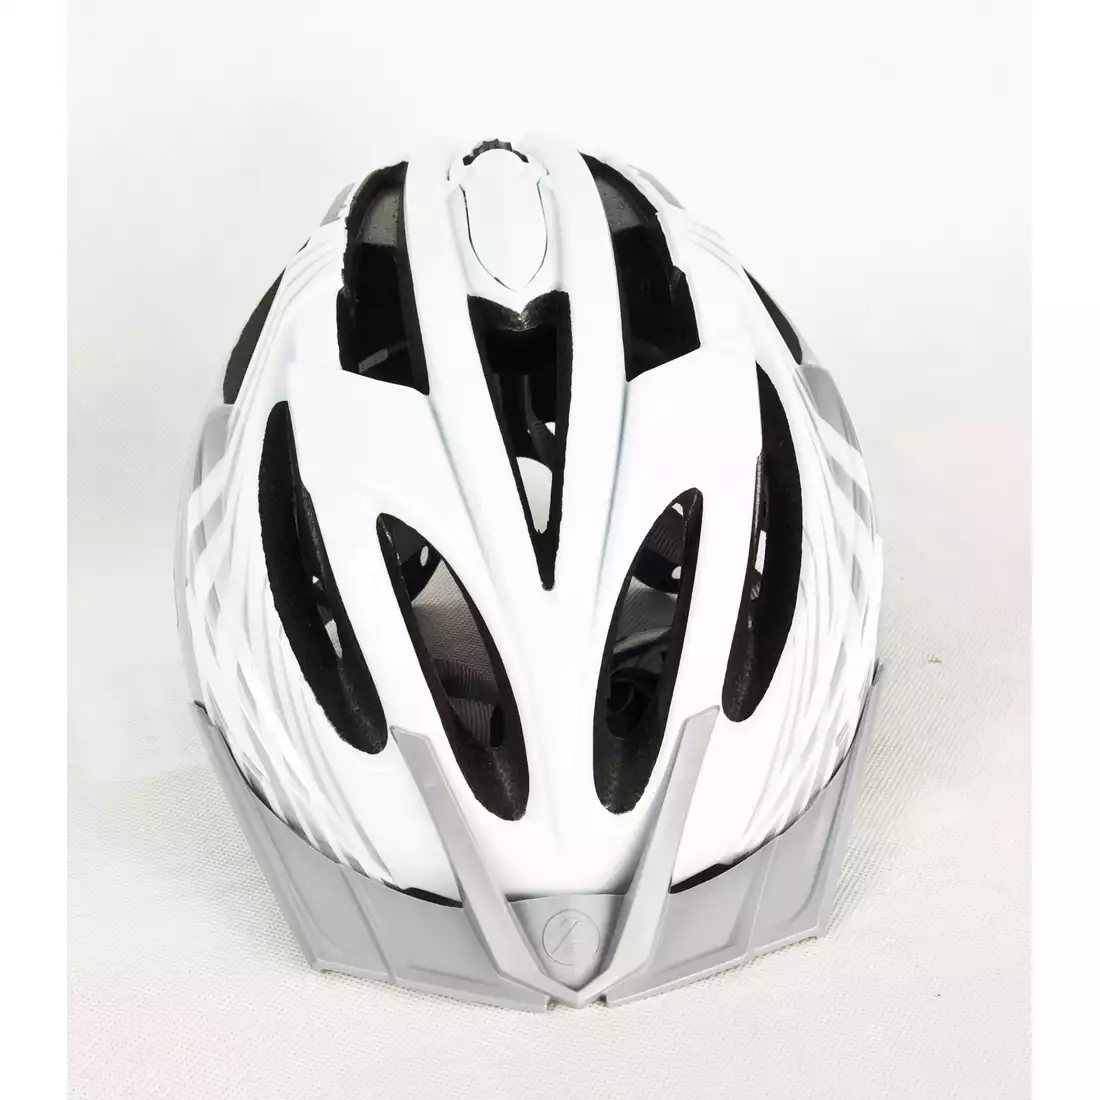 LAZER VANDAL kask rowerowy MTB biało-srebrny